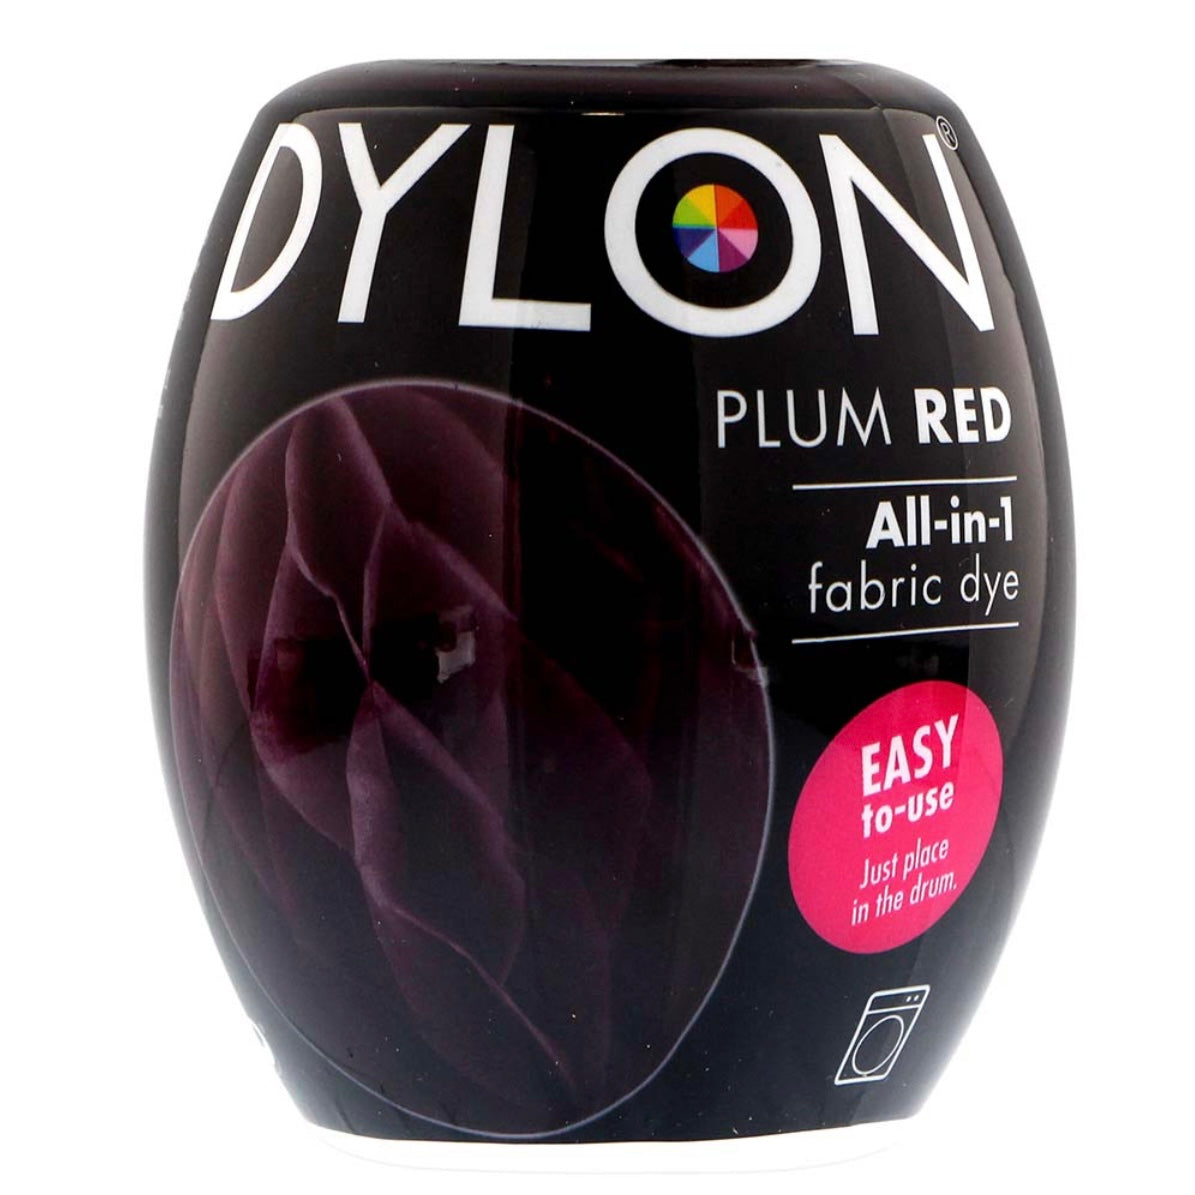 Dylon Tulip Red Fabric Dye Pod 350g